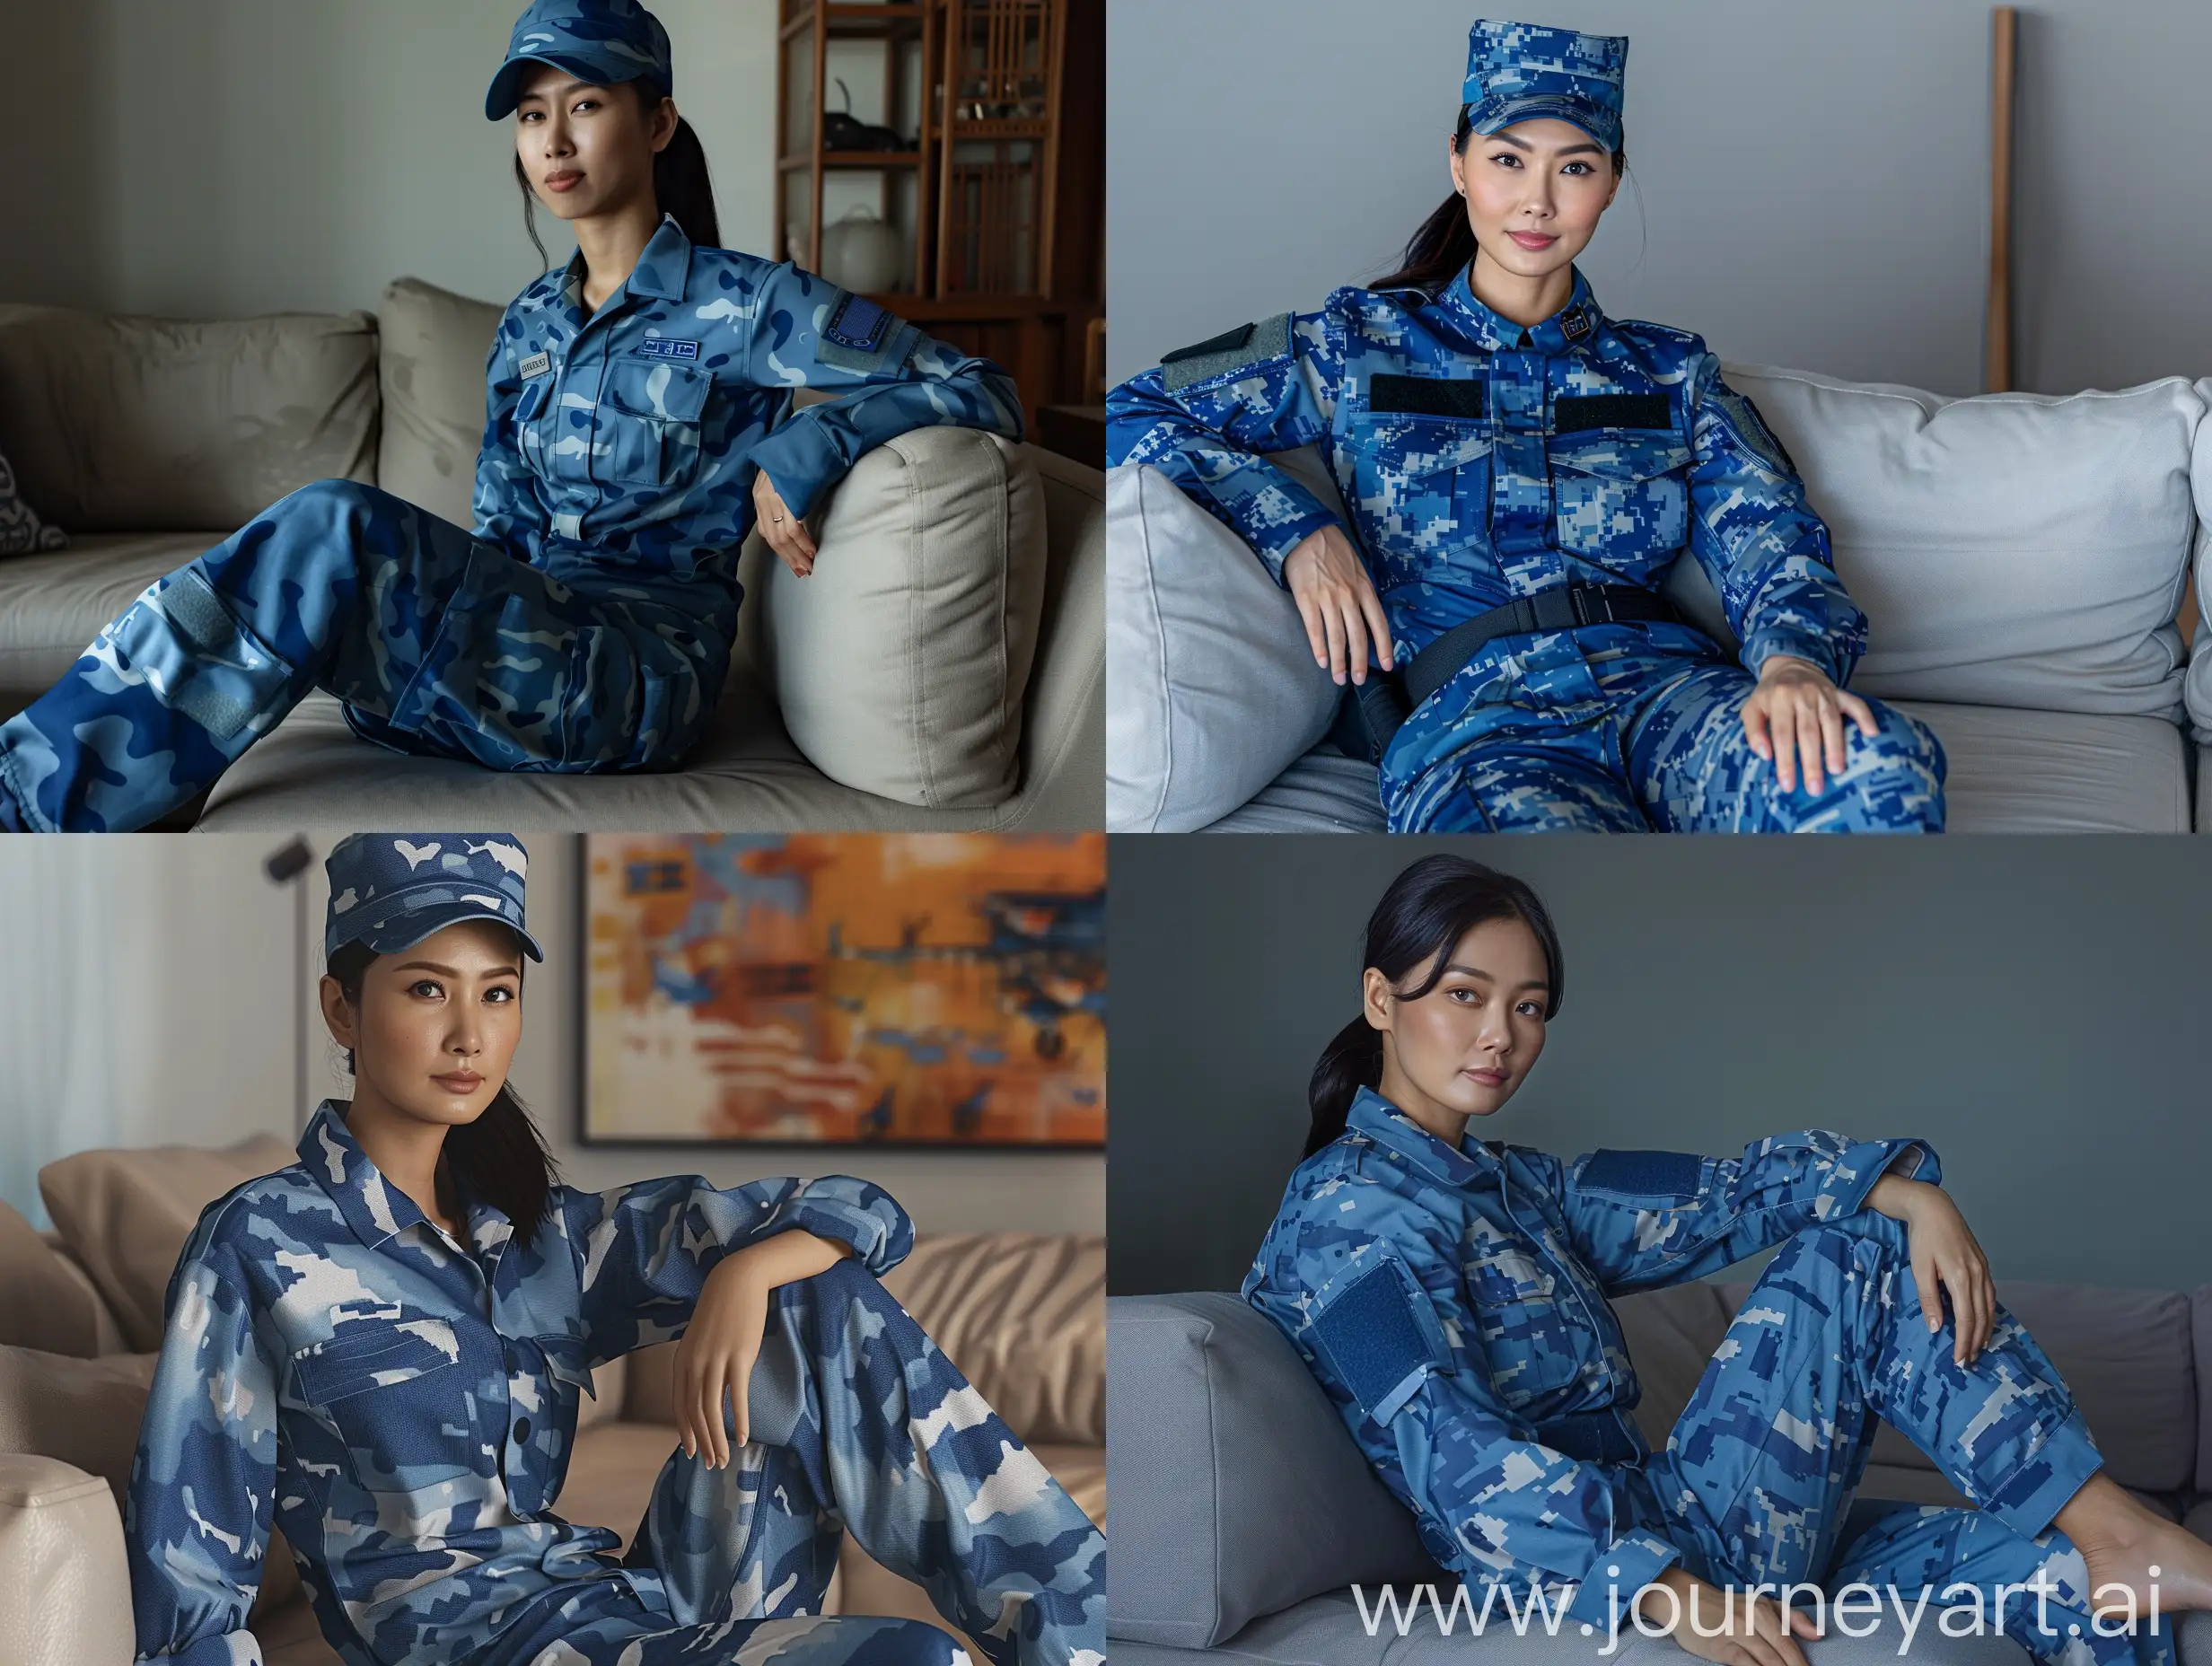 Singaporean-Airforce-Woman-in-Blue-Camouflage-Uniform